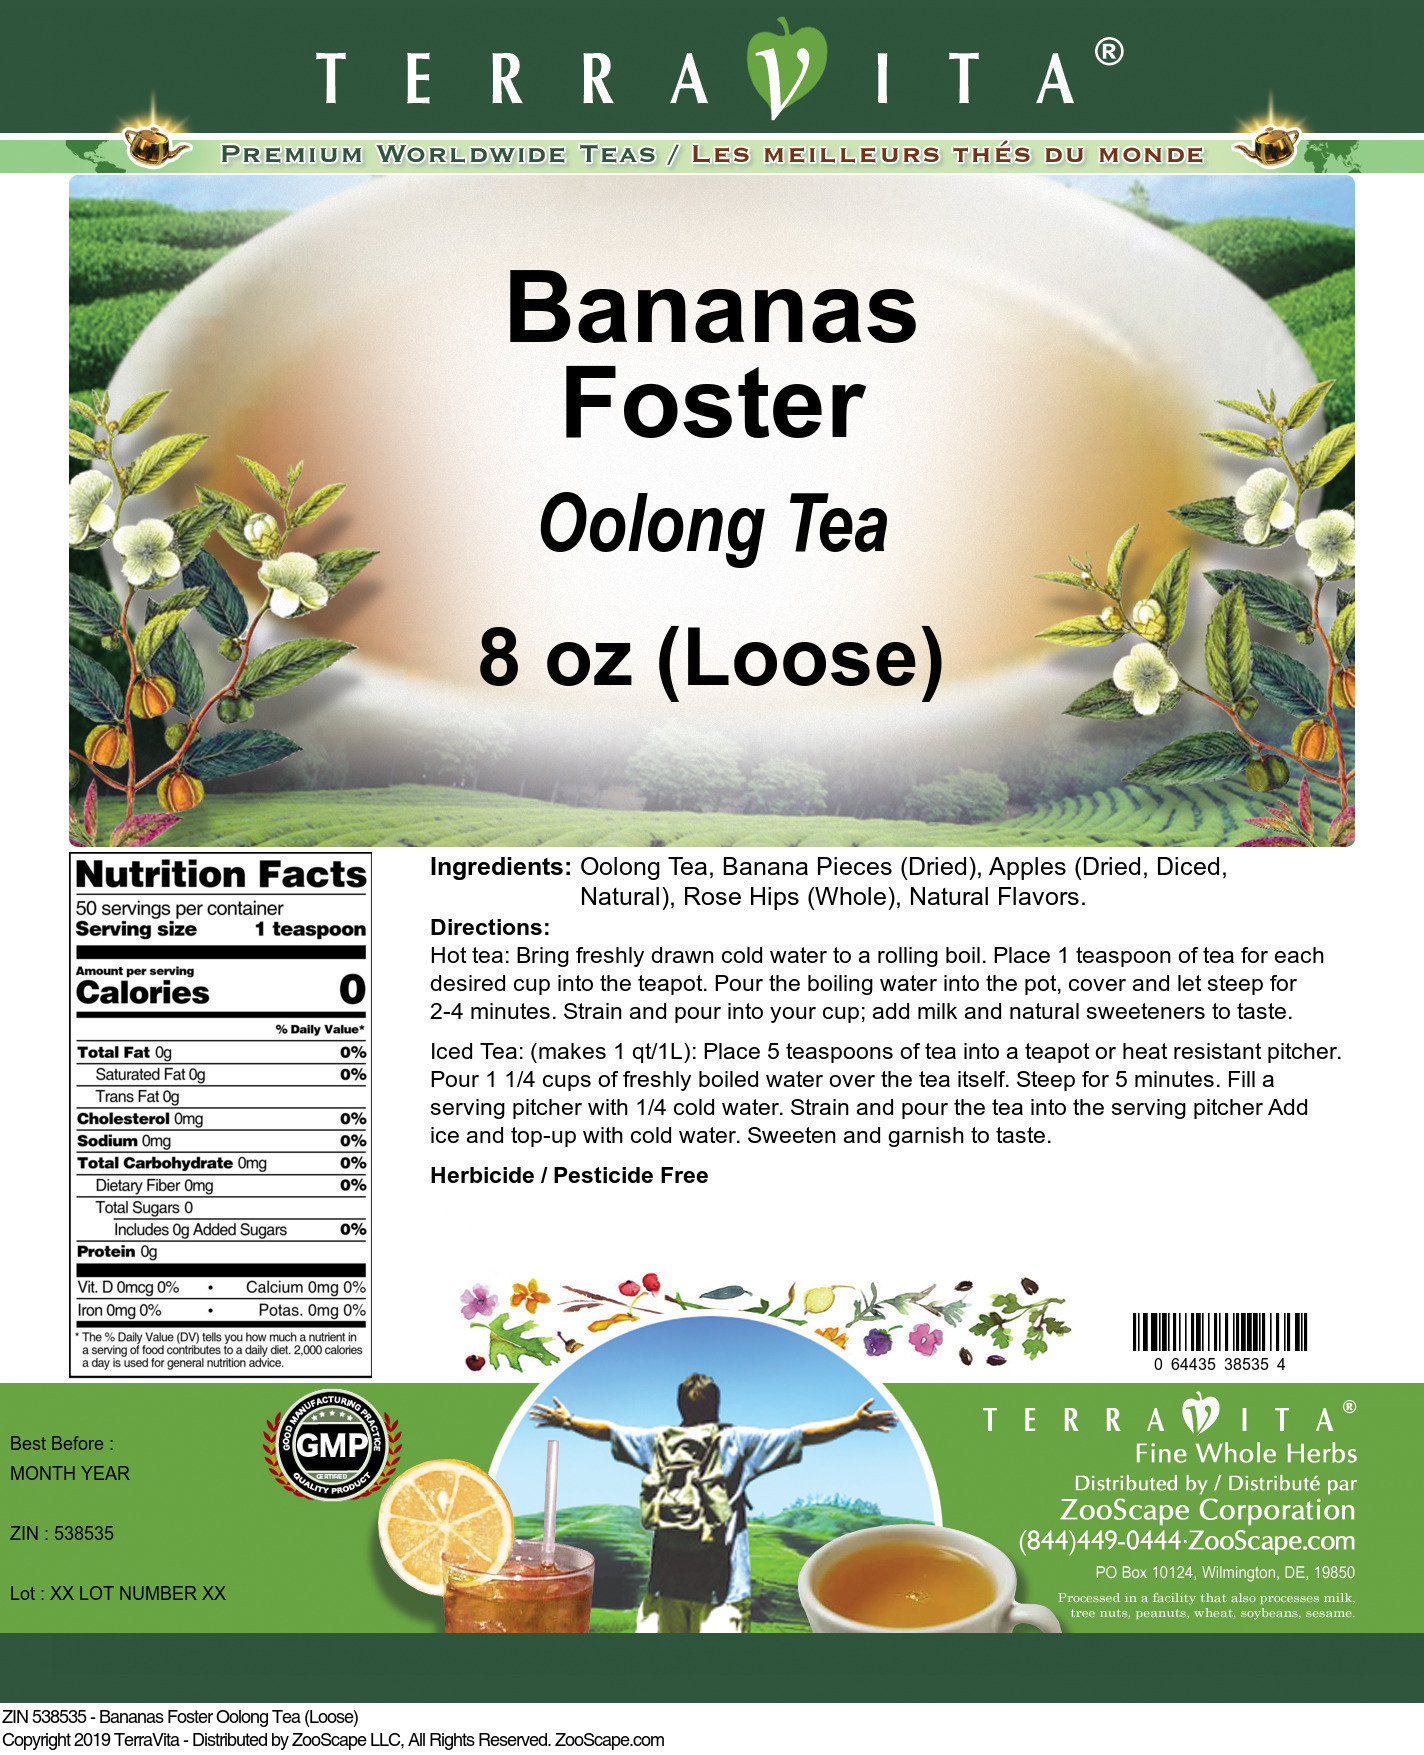 Bananas Foster Oolong Tea (Loose) - Label